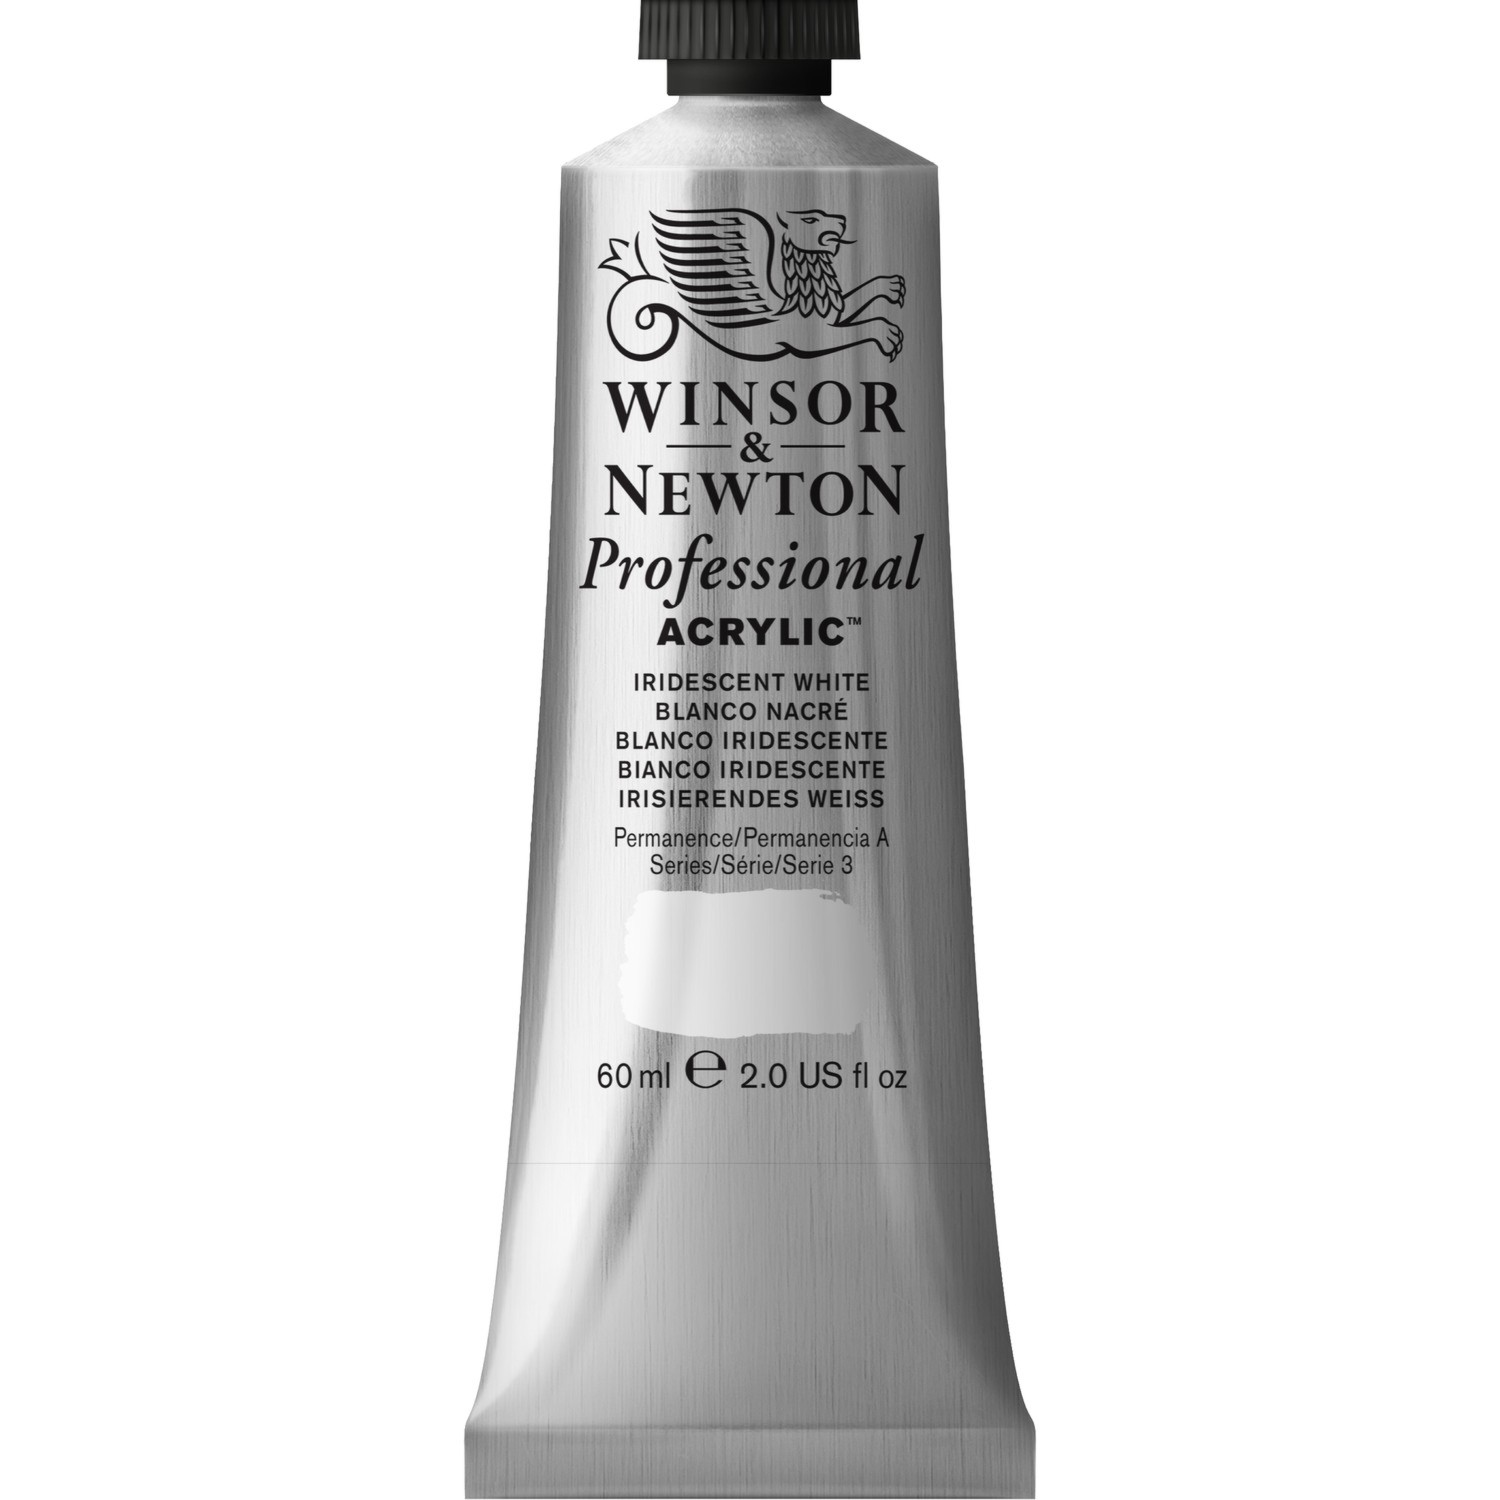 Winsor and Newton 60ml Professional Acrylic Paint - Iridescent White Image 1